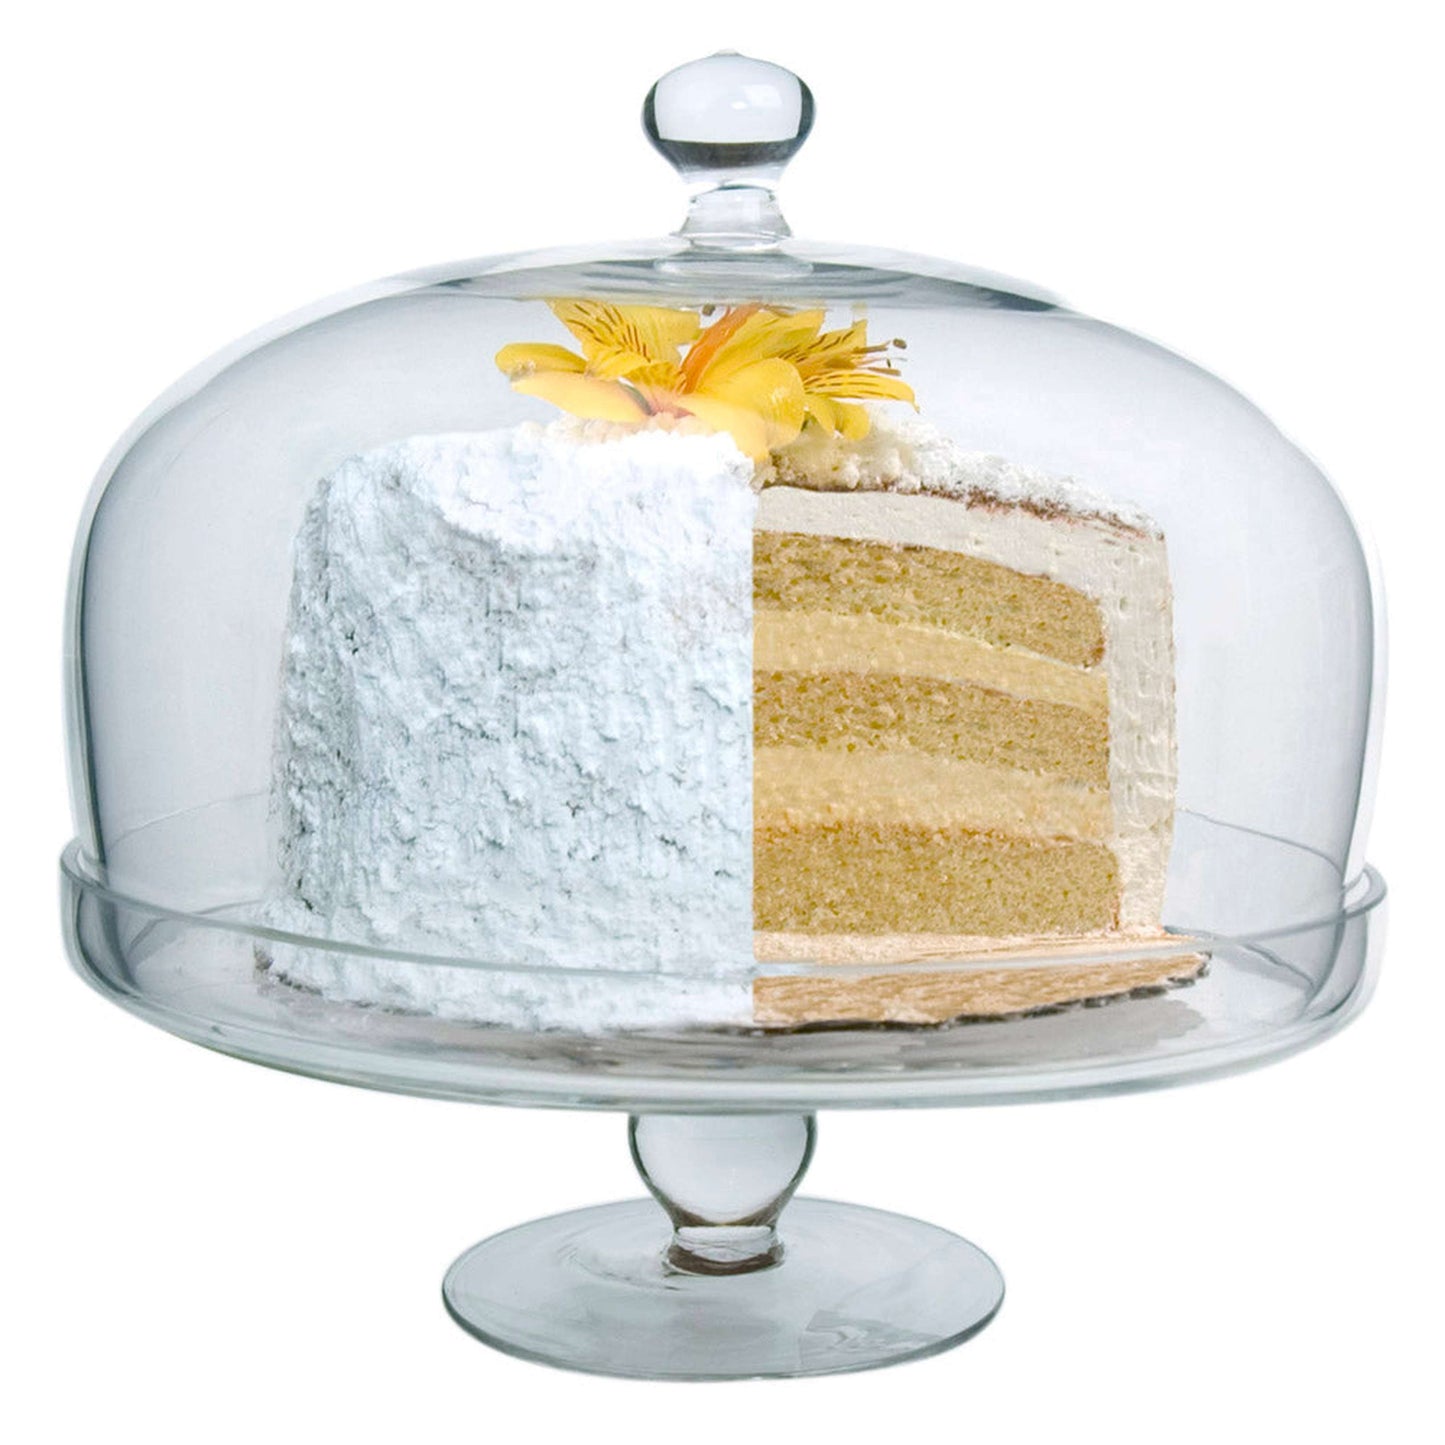 Artland Glass Simplicity Cake Stand with Round Dome